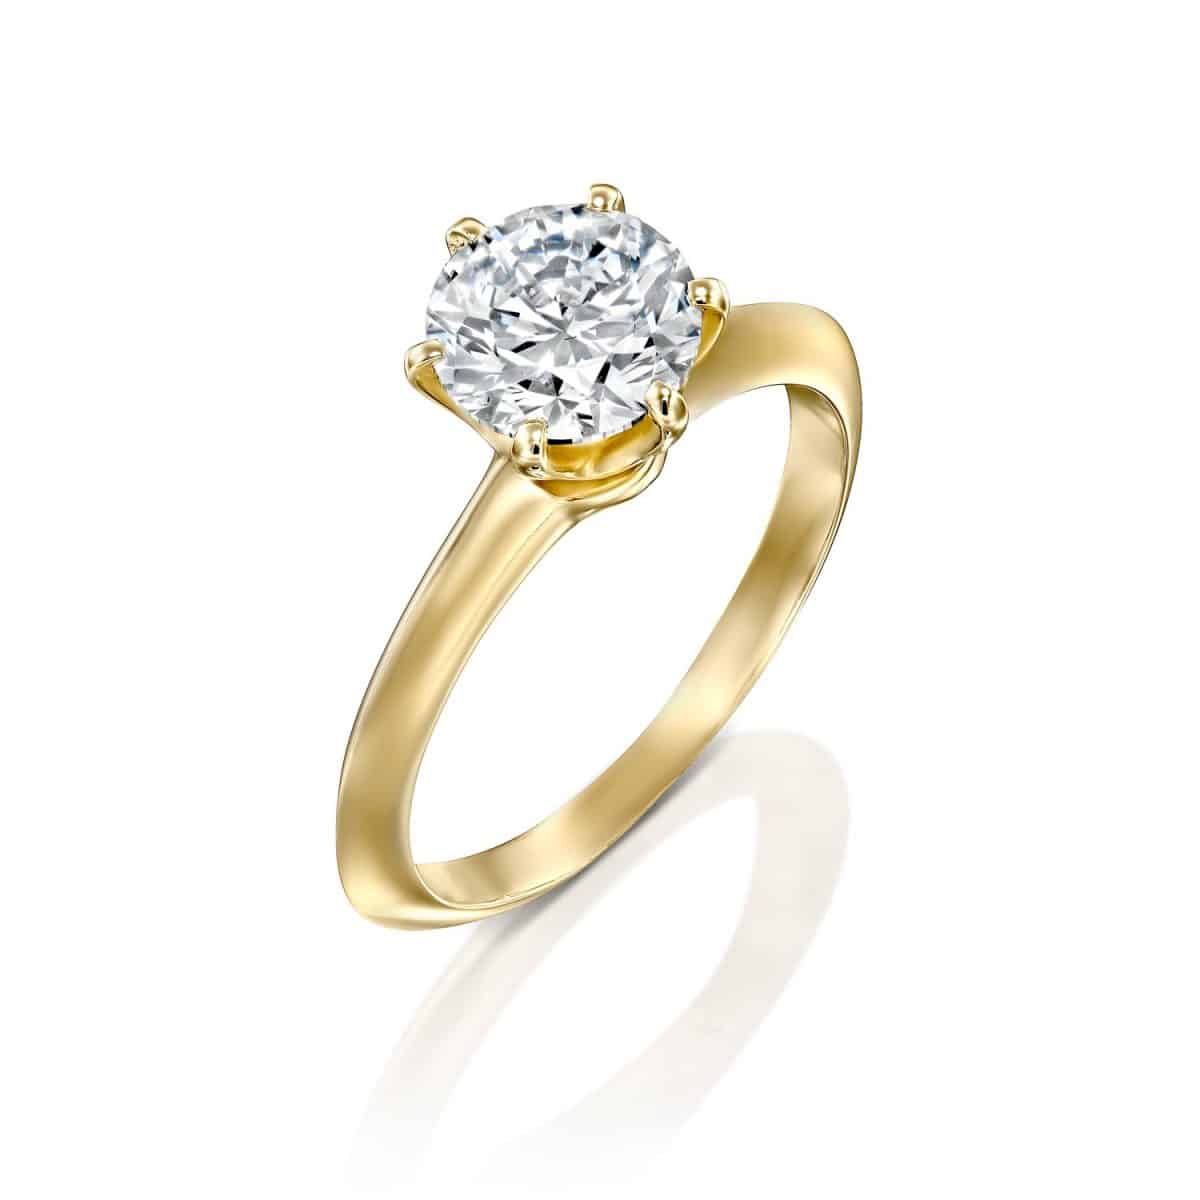 1.51 carat Helen engagement ring